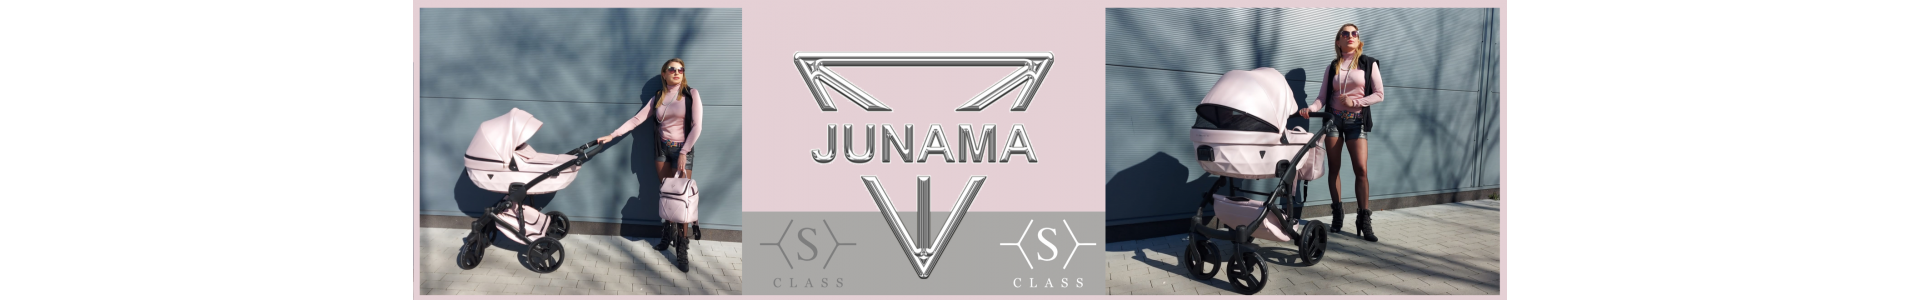 JUNAMA  DIAMOND S CLASS